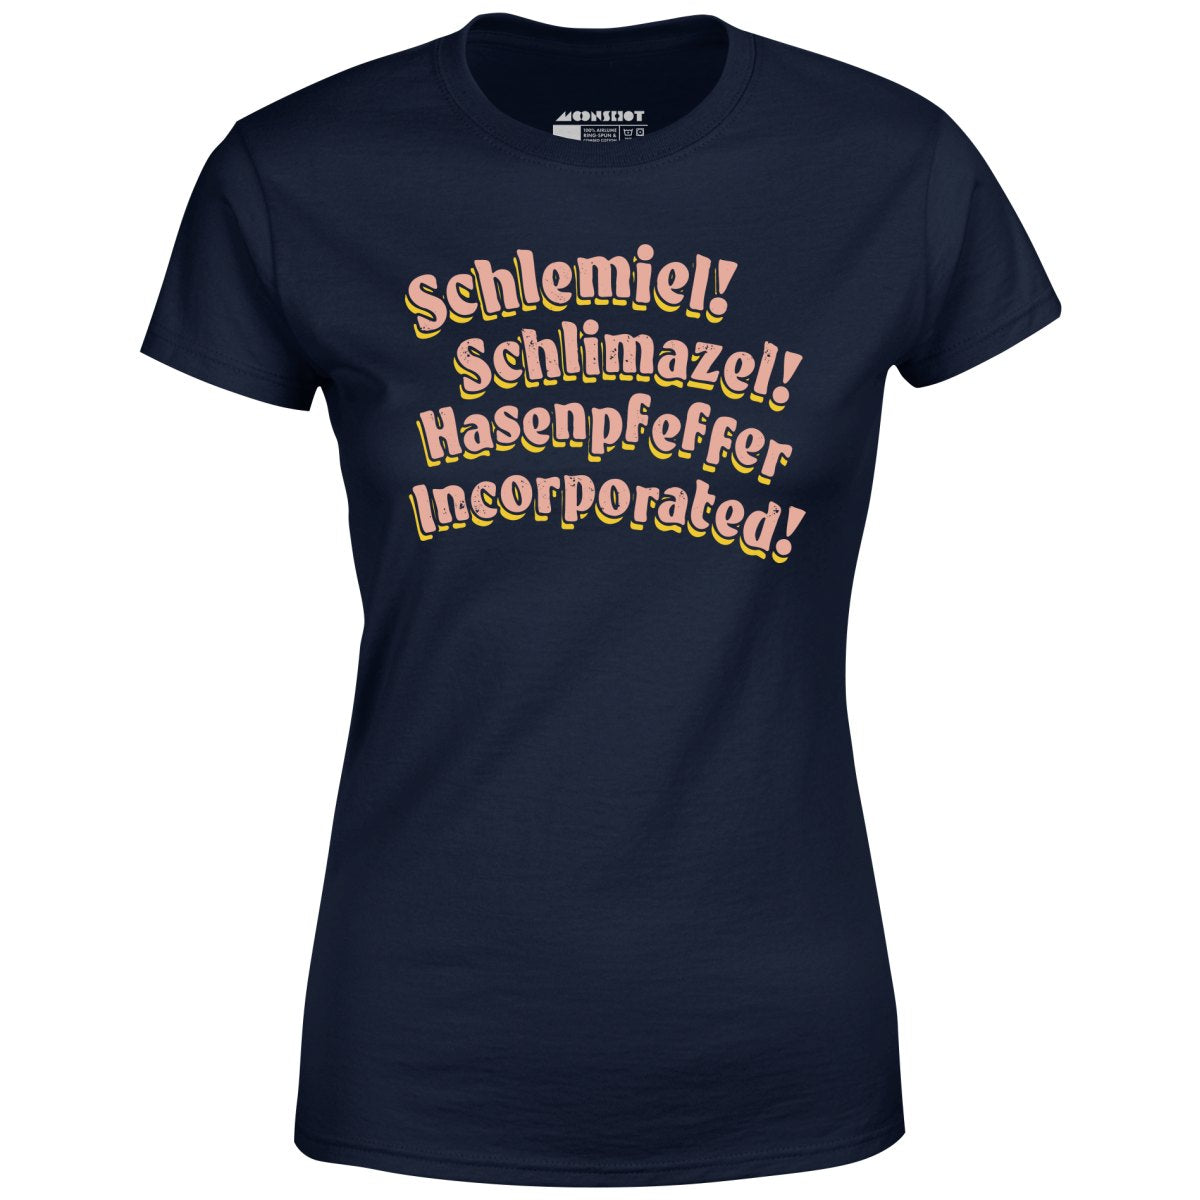 Schlemiel! Schlimazel! Hasenpfeffer Incorporated - Women's T-Shirt